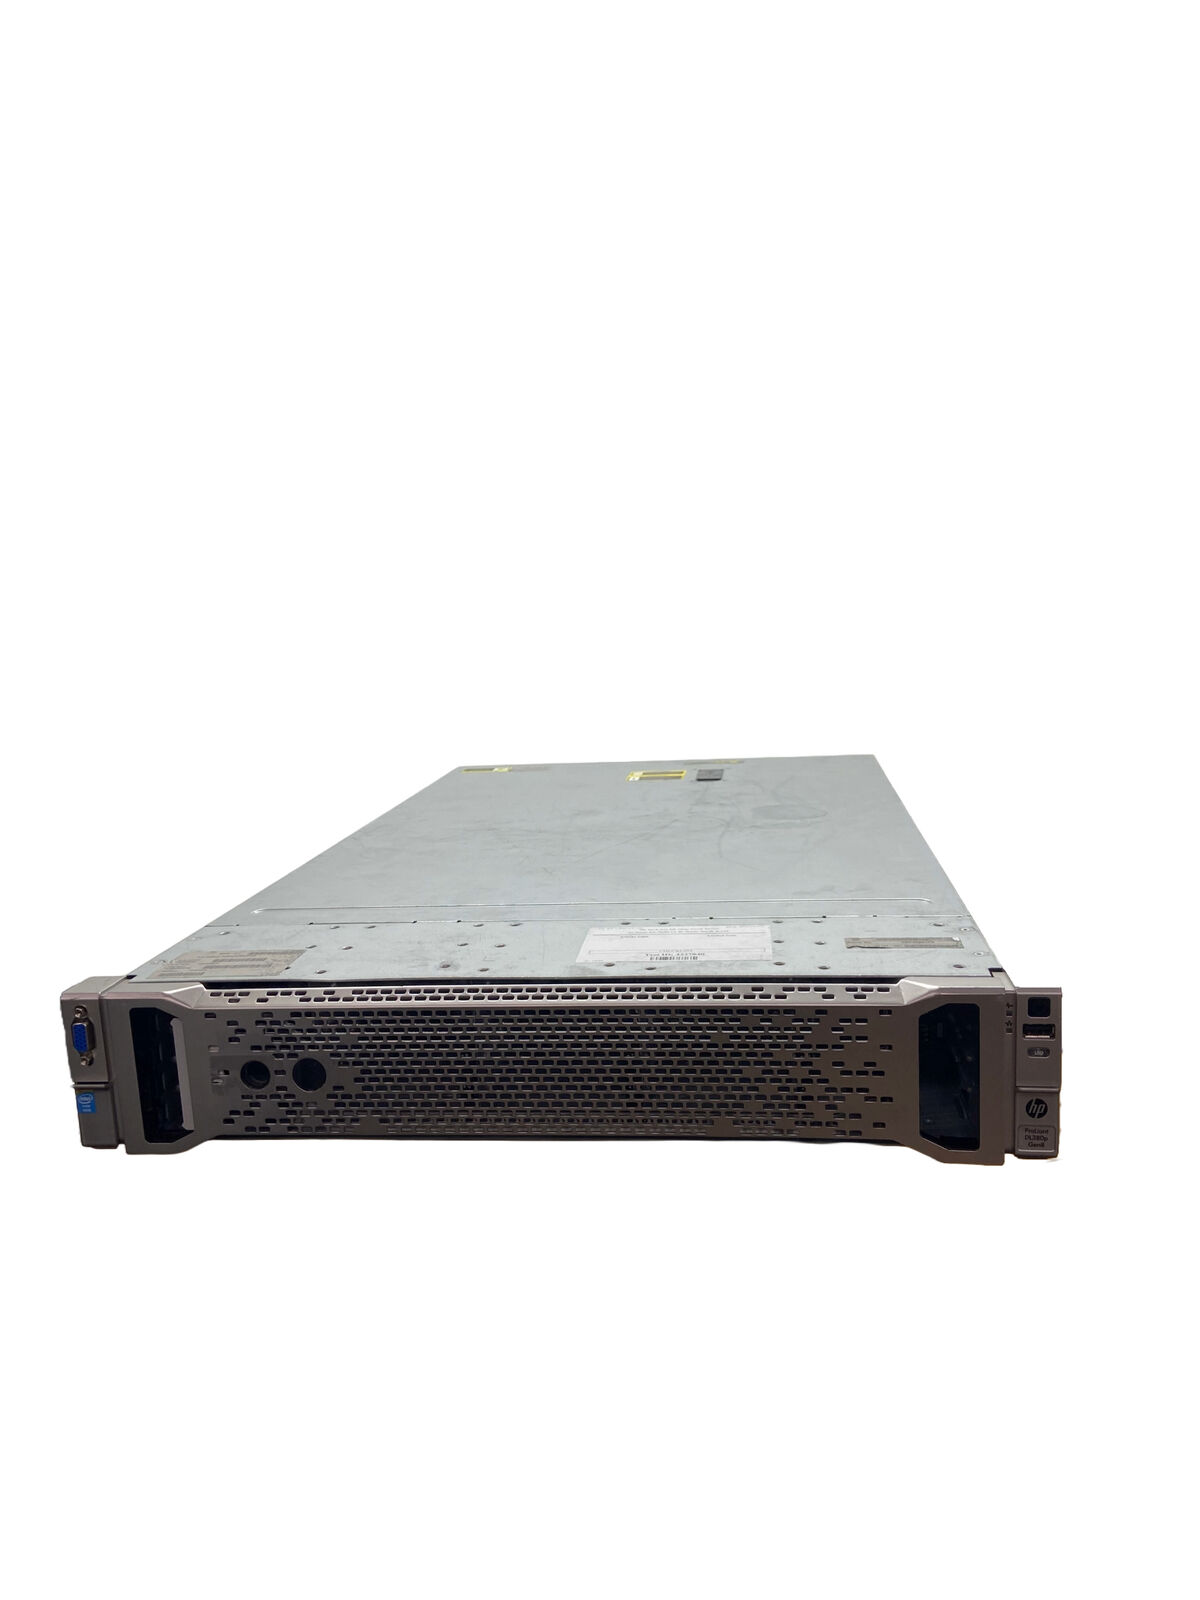 HP ProLiant DL380p Gen8 2U Server 2x Xeon E5-2640 v2 2.0Ghz 96GB RAM NO HDDs